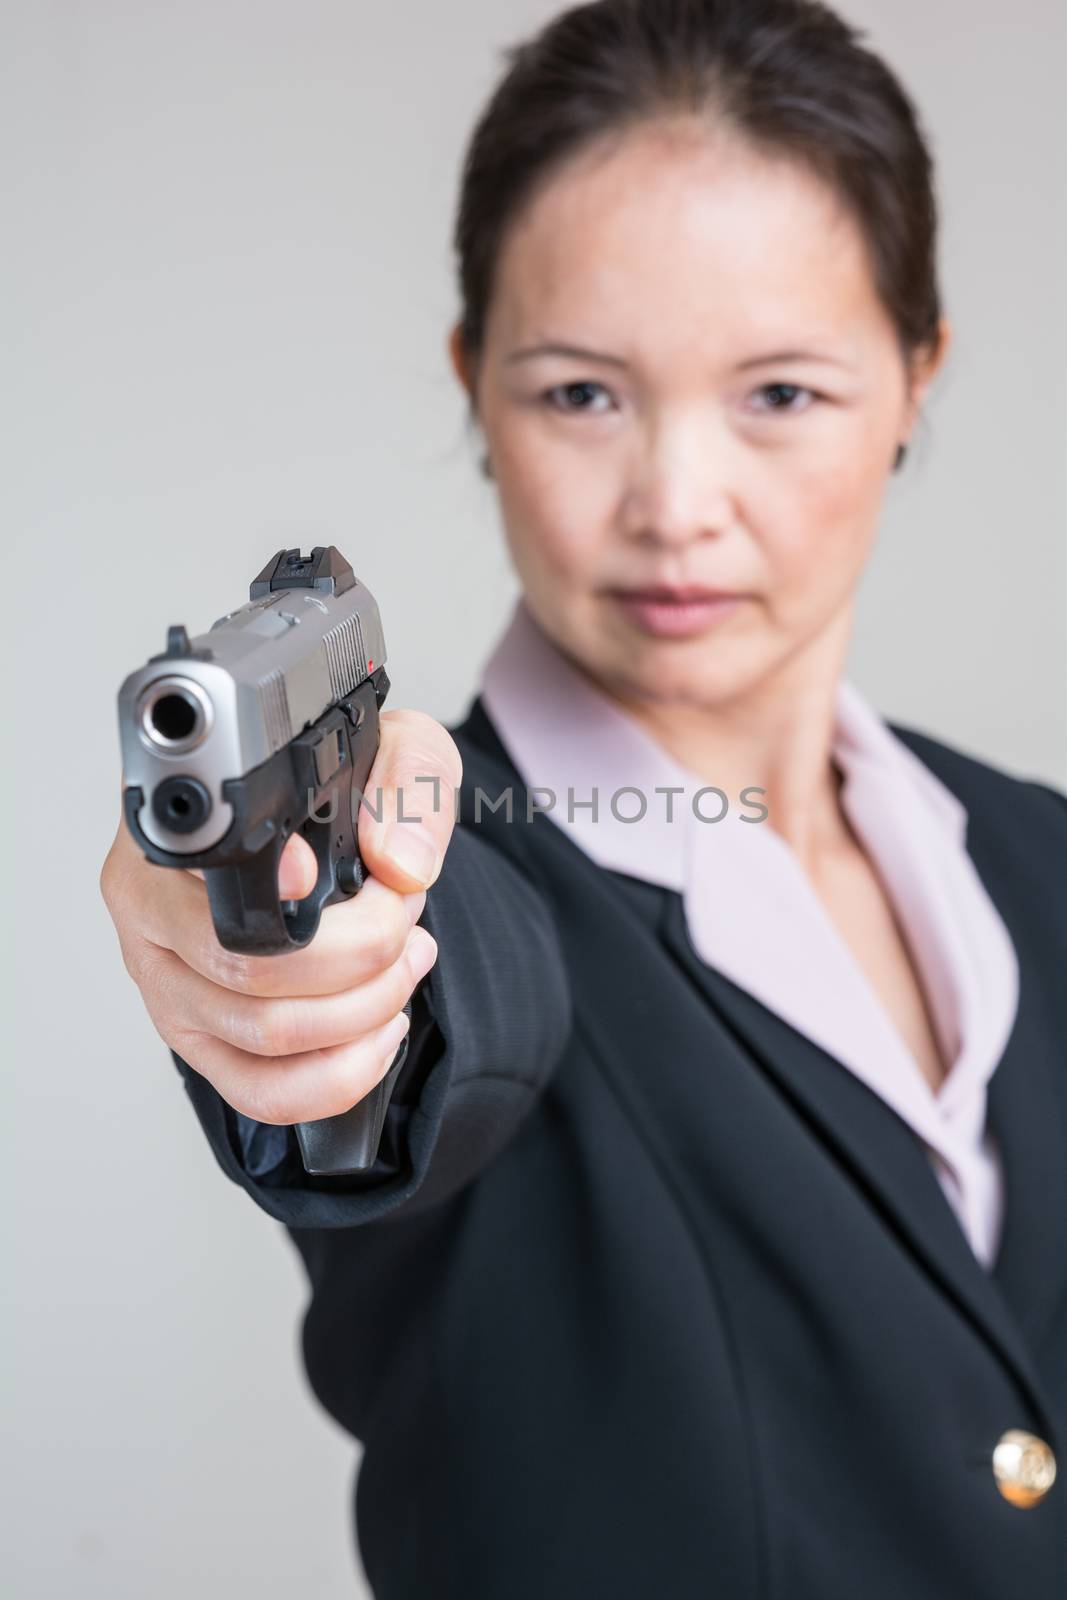 Woman aiming a hand gun by IVYPHOTOS